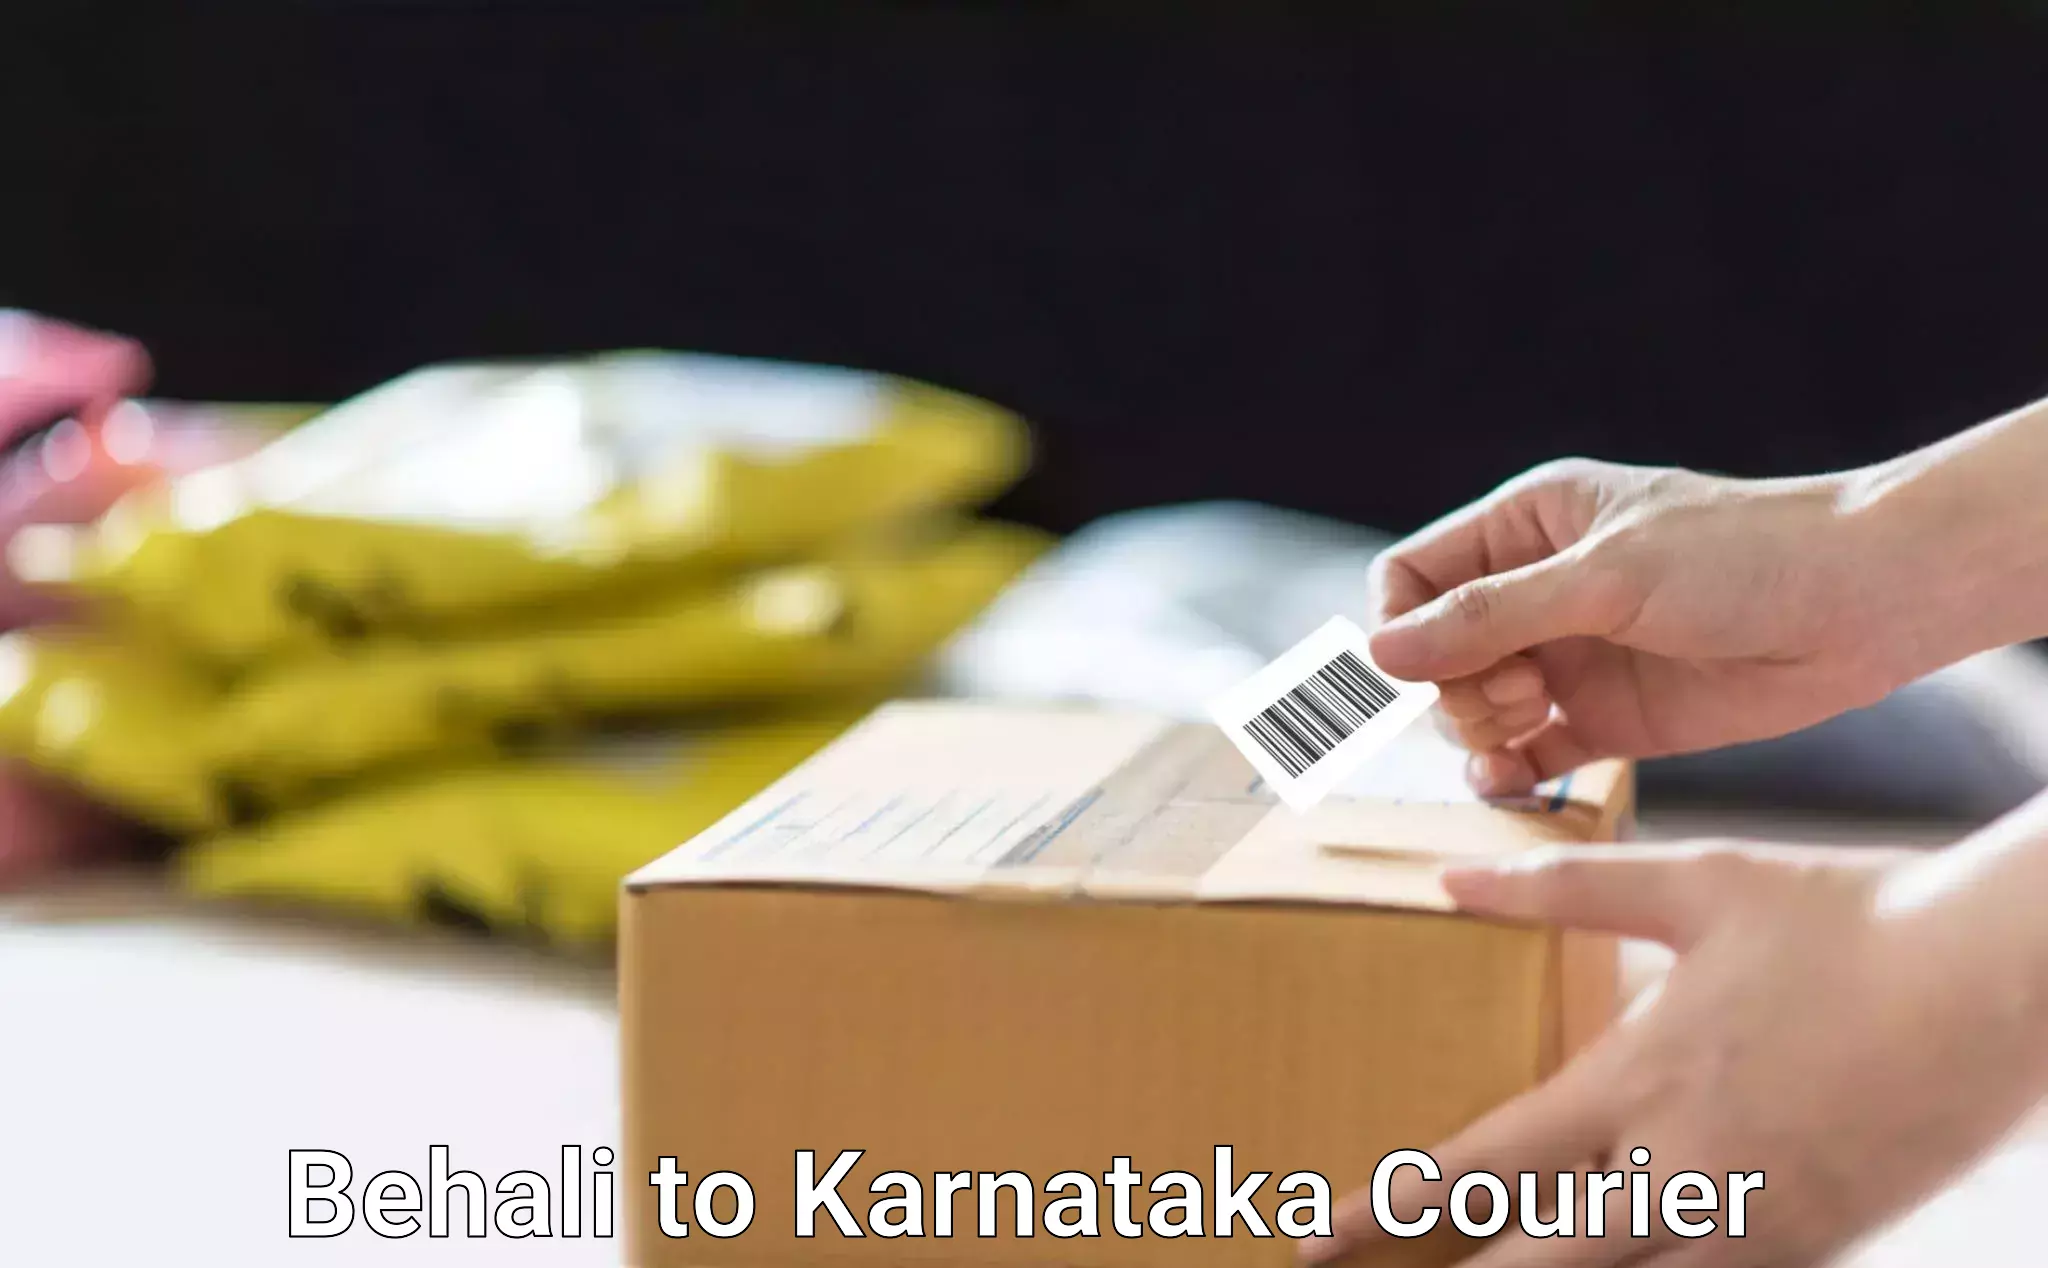 State-of-the-art courier technology Behali to Karnataka